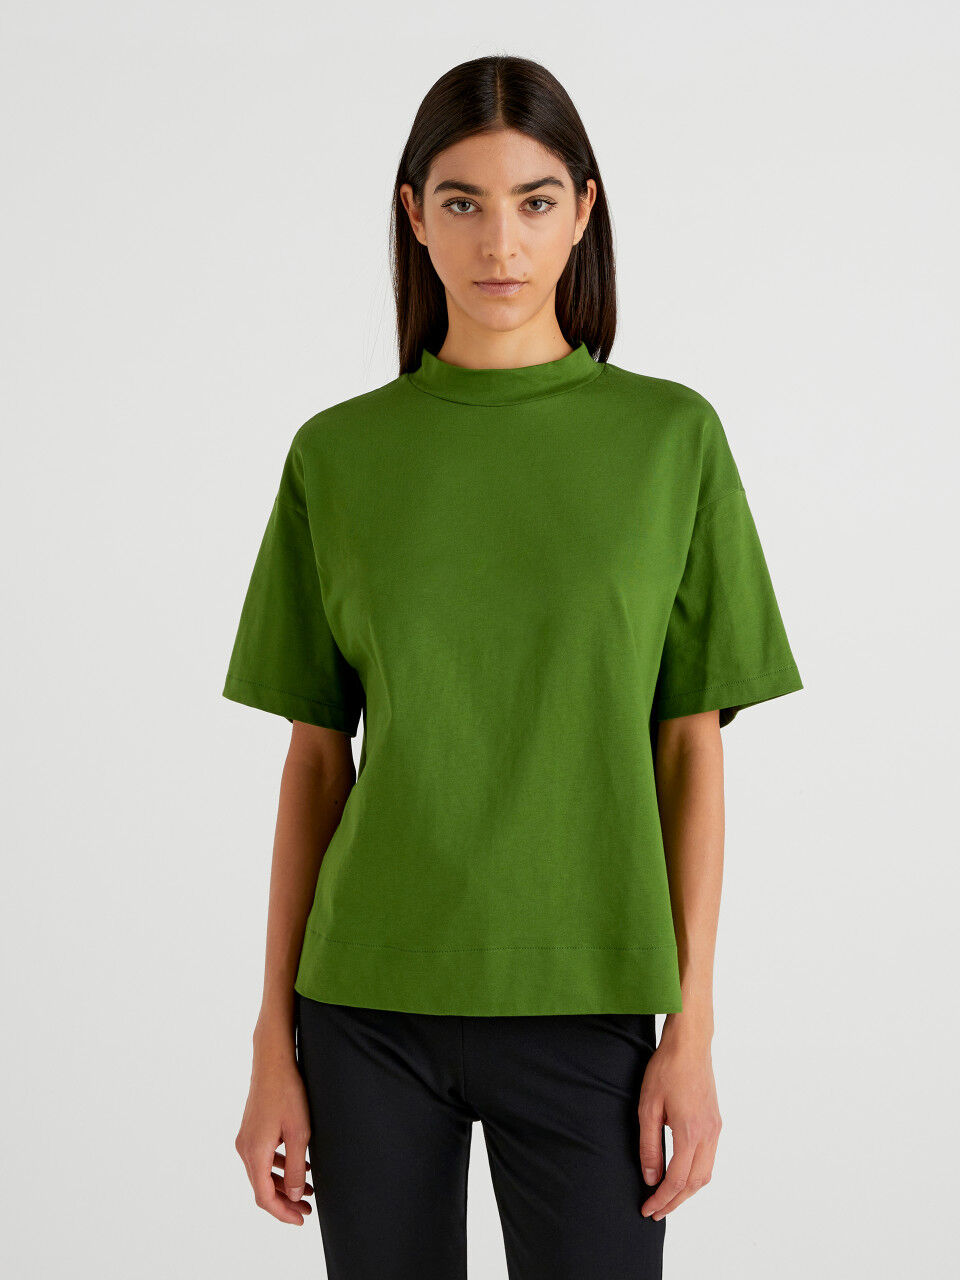 Aspesi Andere materialien t-shirt in Grün Damen Bekleidung Oberteile T-Shirts 